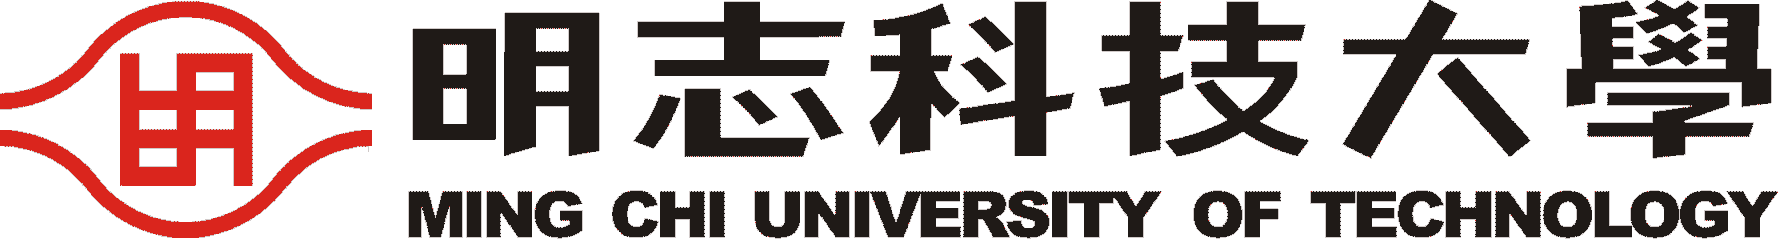 ming chi university logo